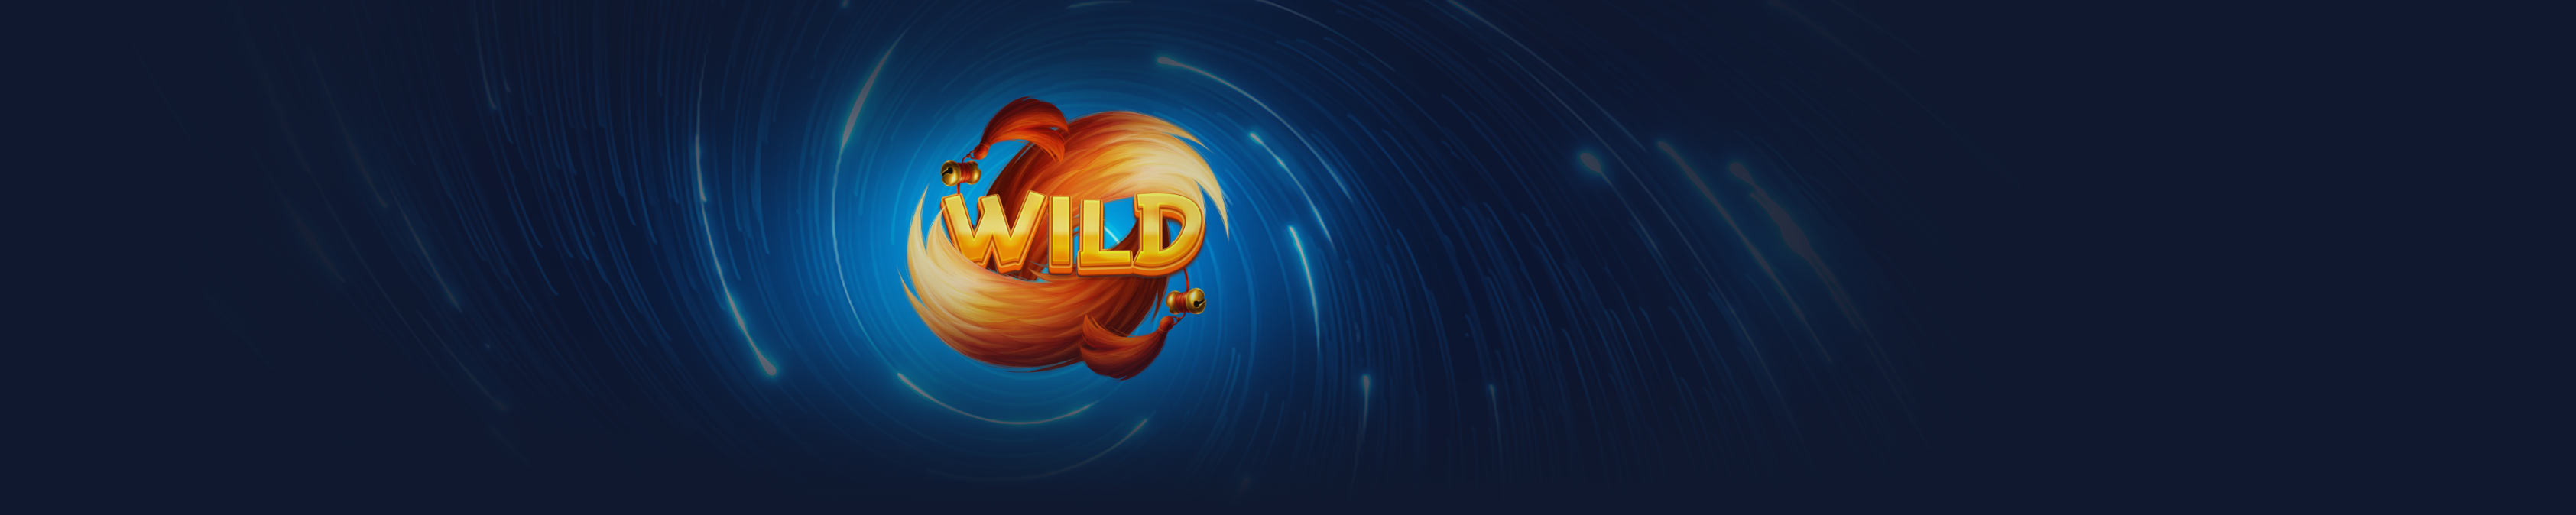 casinosearch.sk Wild symboly v online automatoch